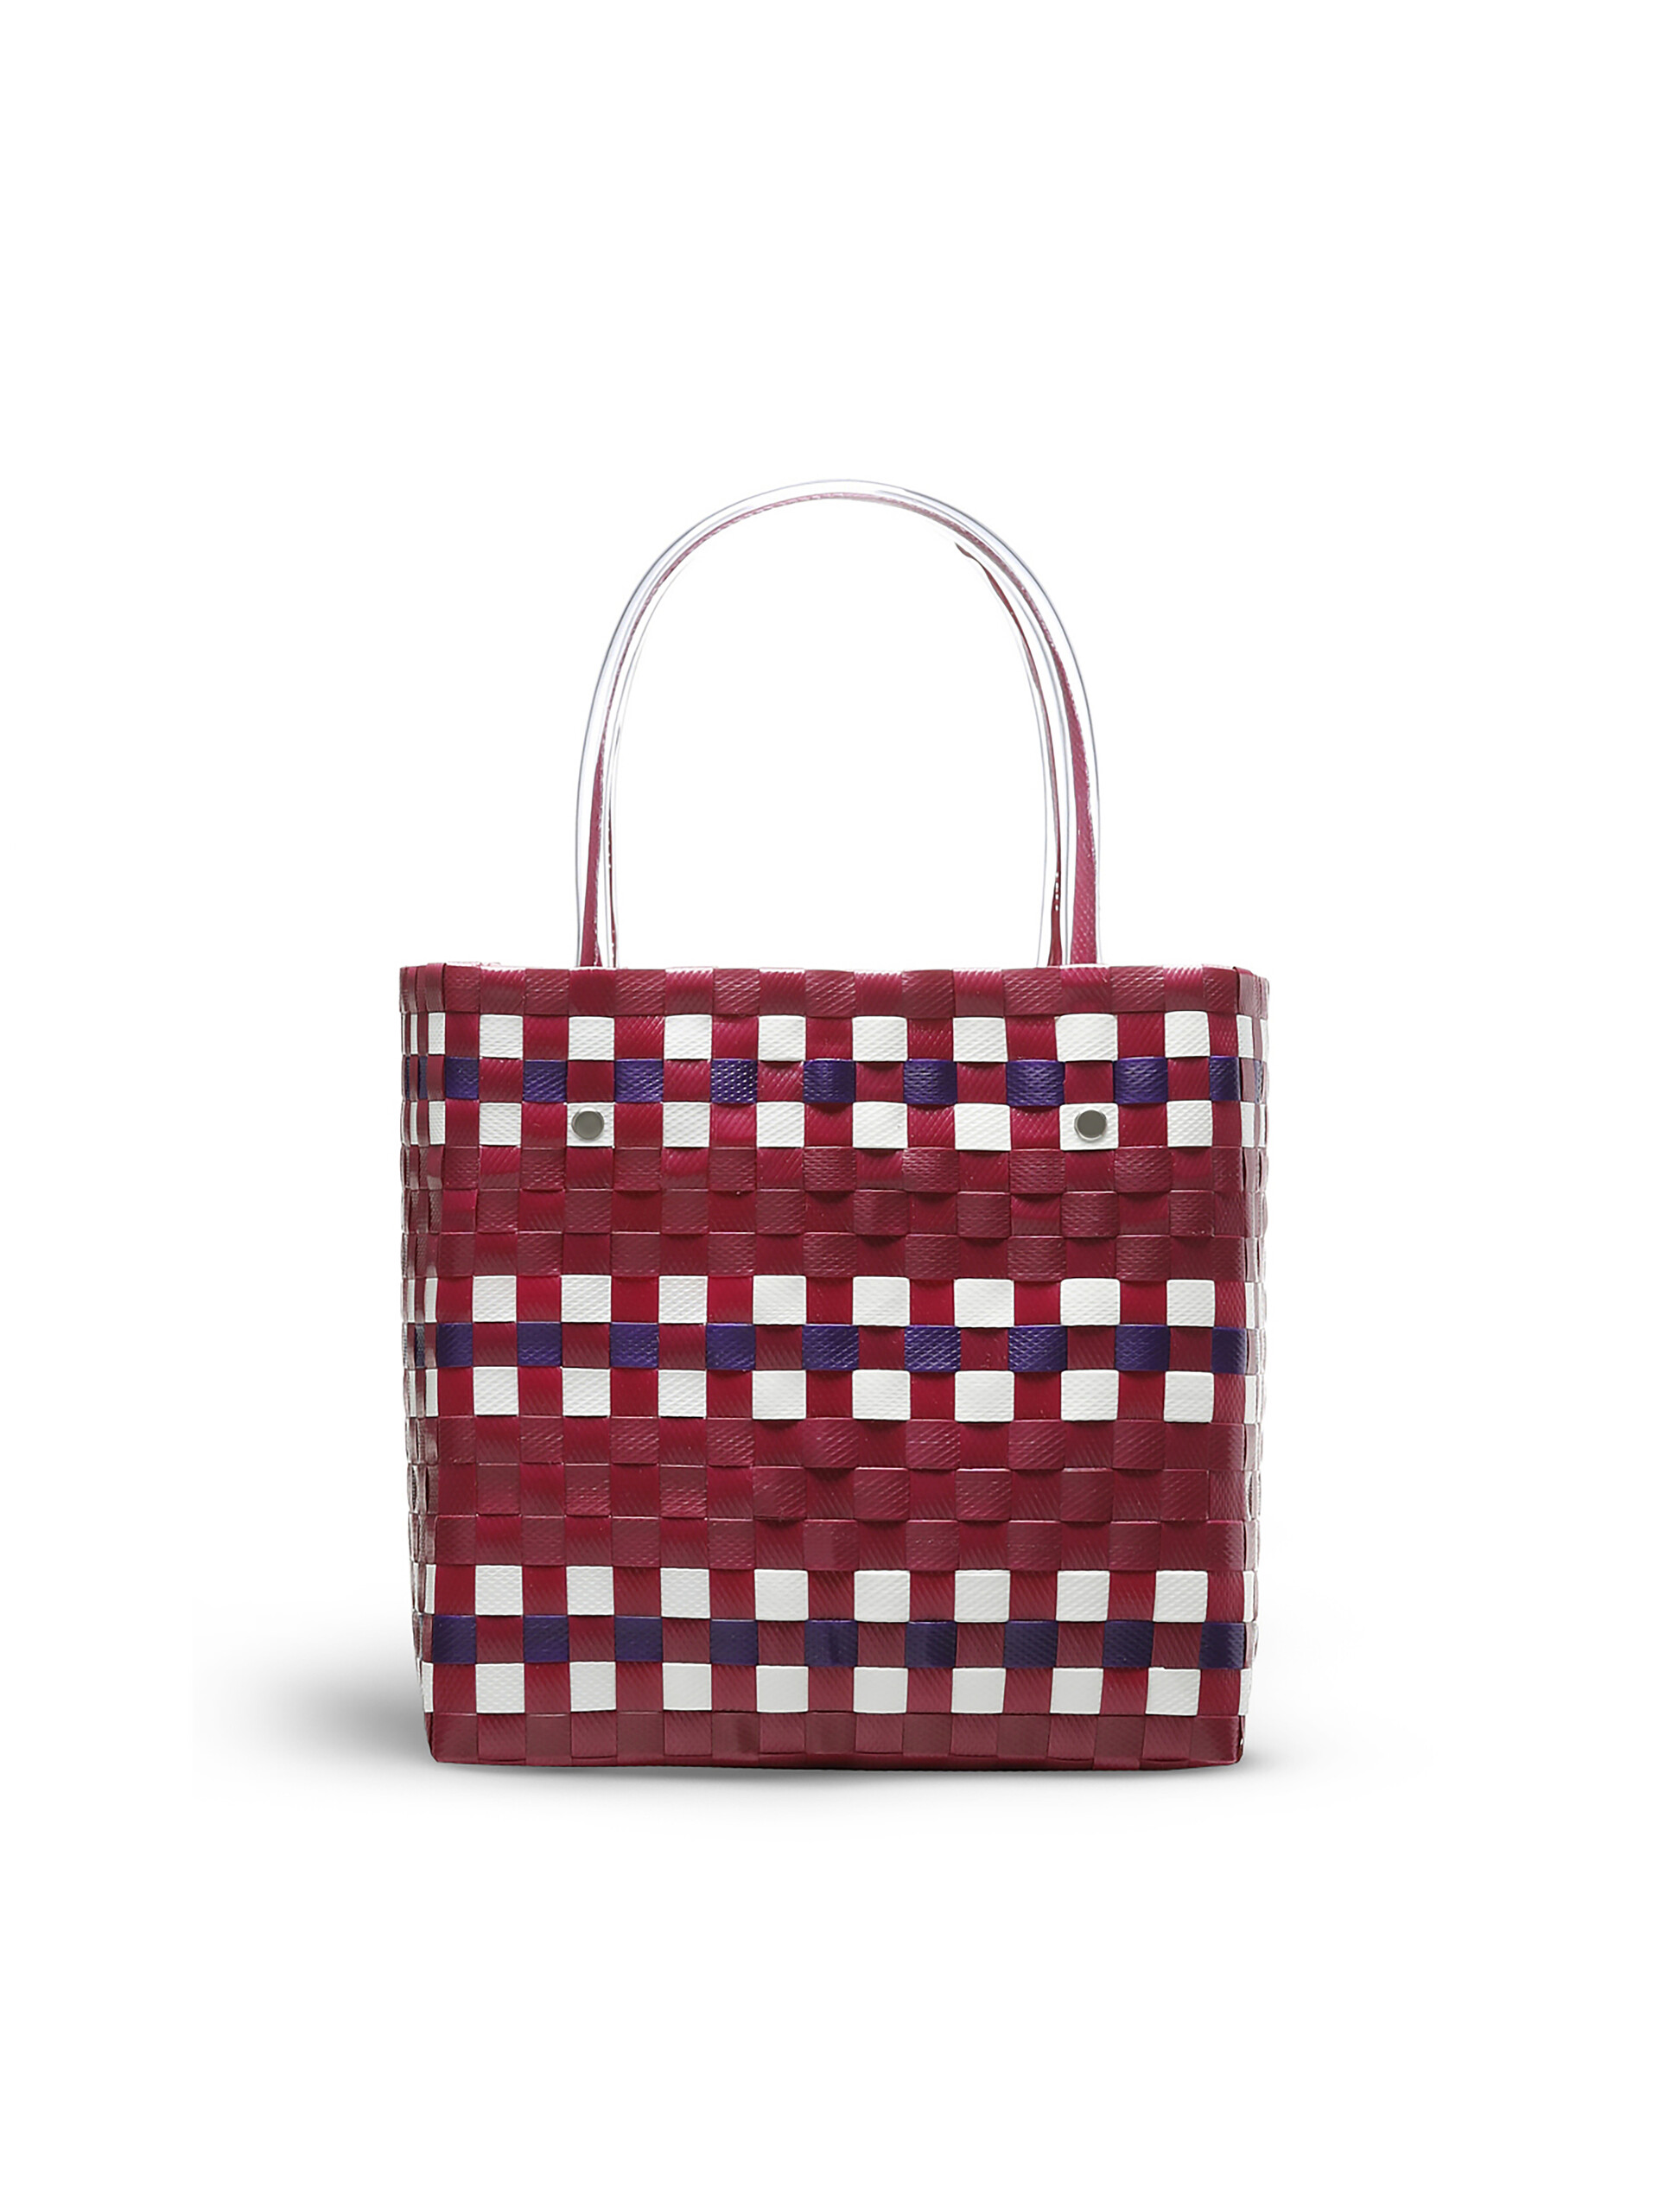 MARNI MARKET BASKET bag in pink woven material - Bags - Image 3